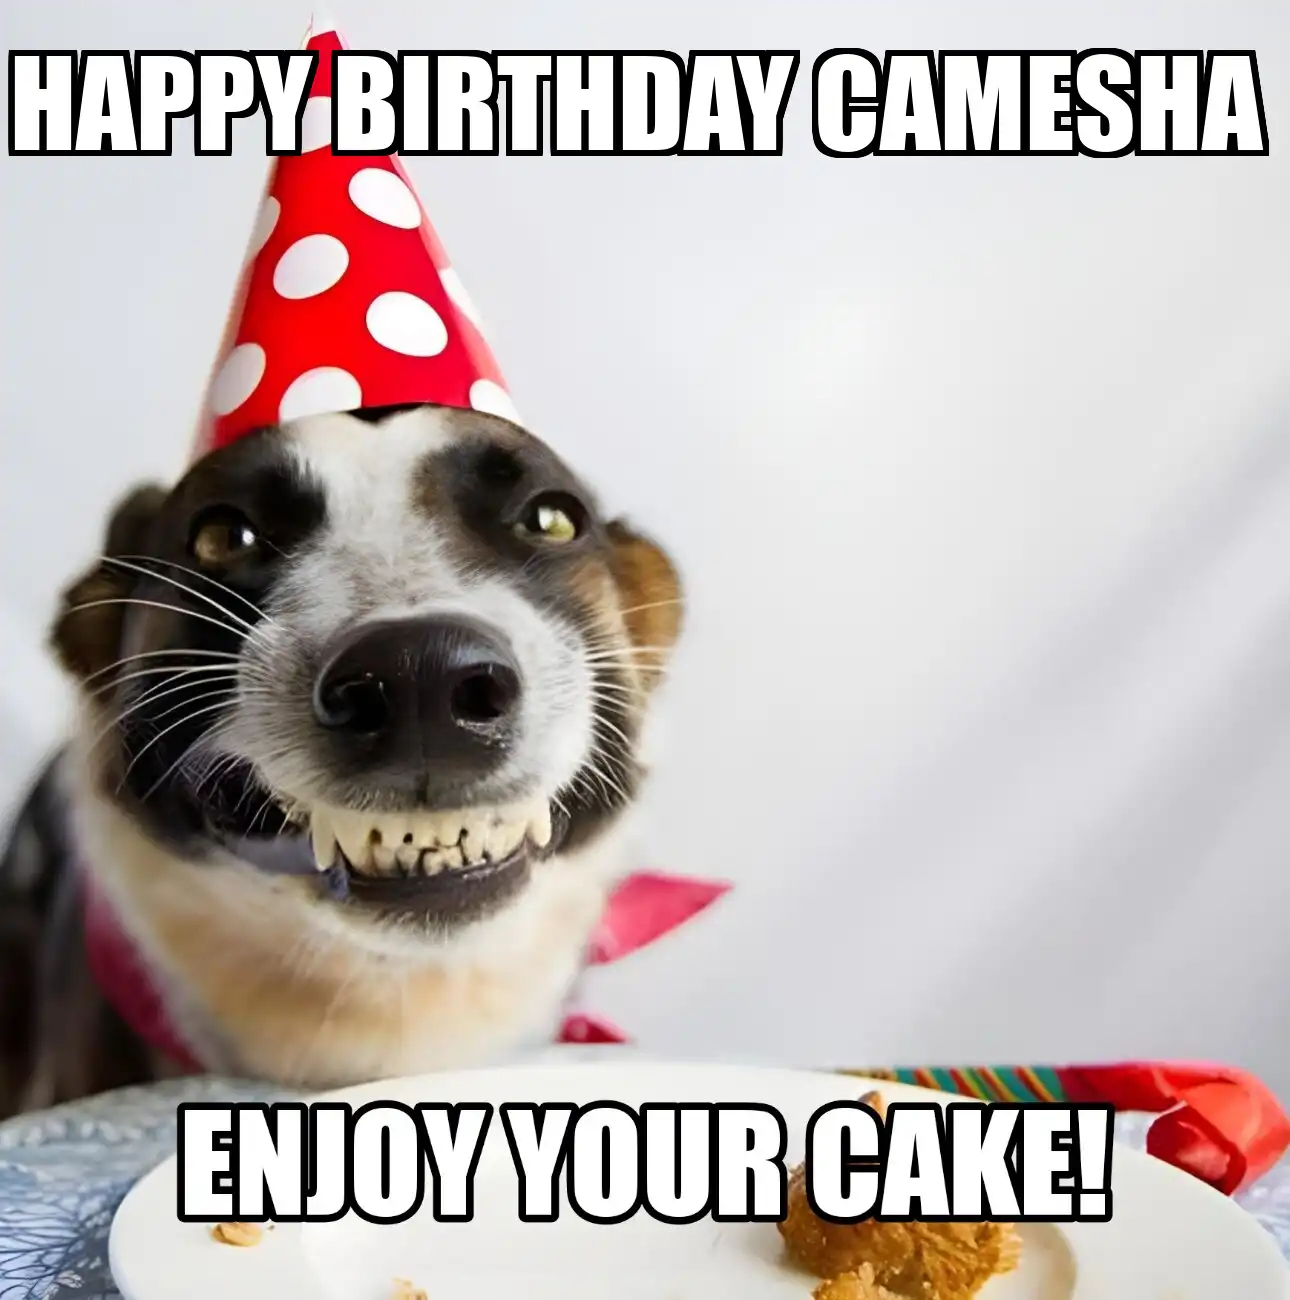 Happy Birthday Camesha Enjoy Your Cake Dog Meme